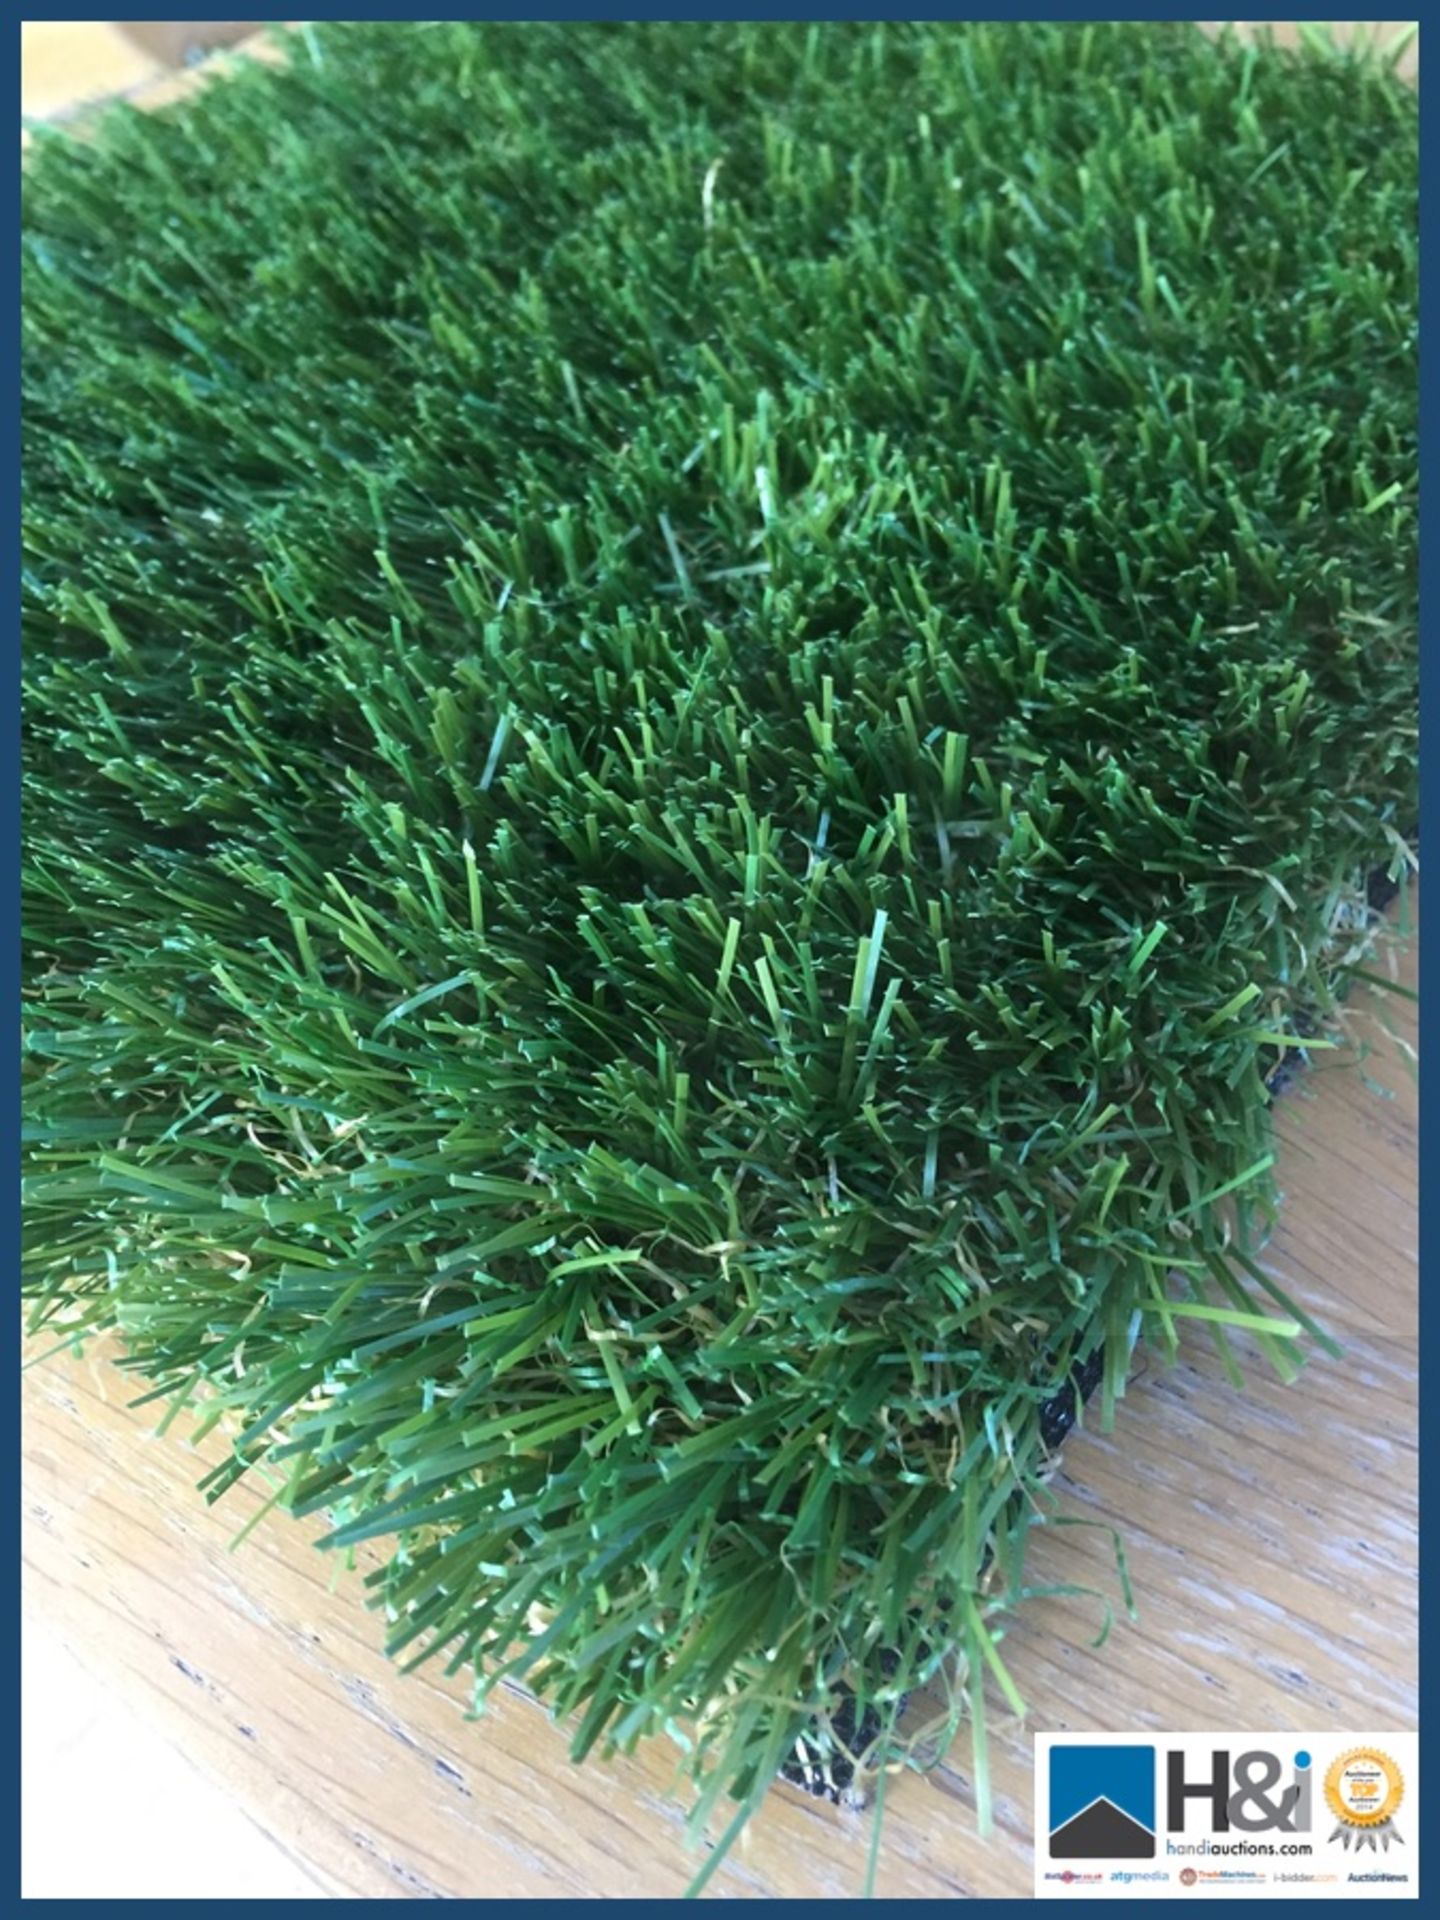 Playrite Nearlygrass Luxury Lawn Grass 45mm thickness. 15x2m total 30m2 per roll/lot. RRP GBP 1,350